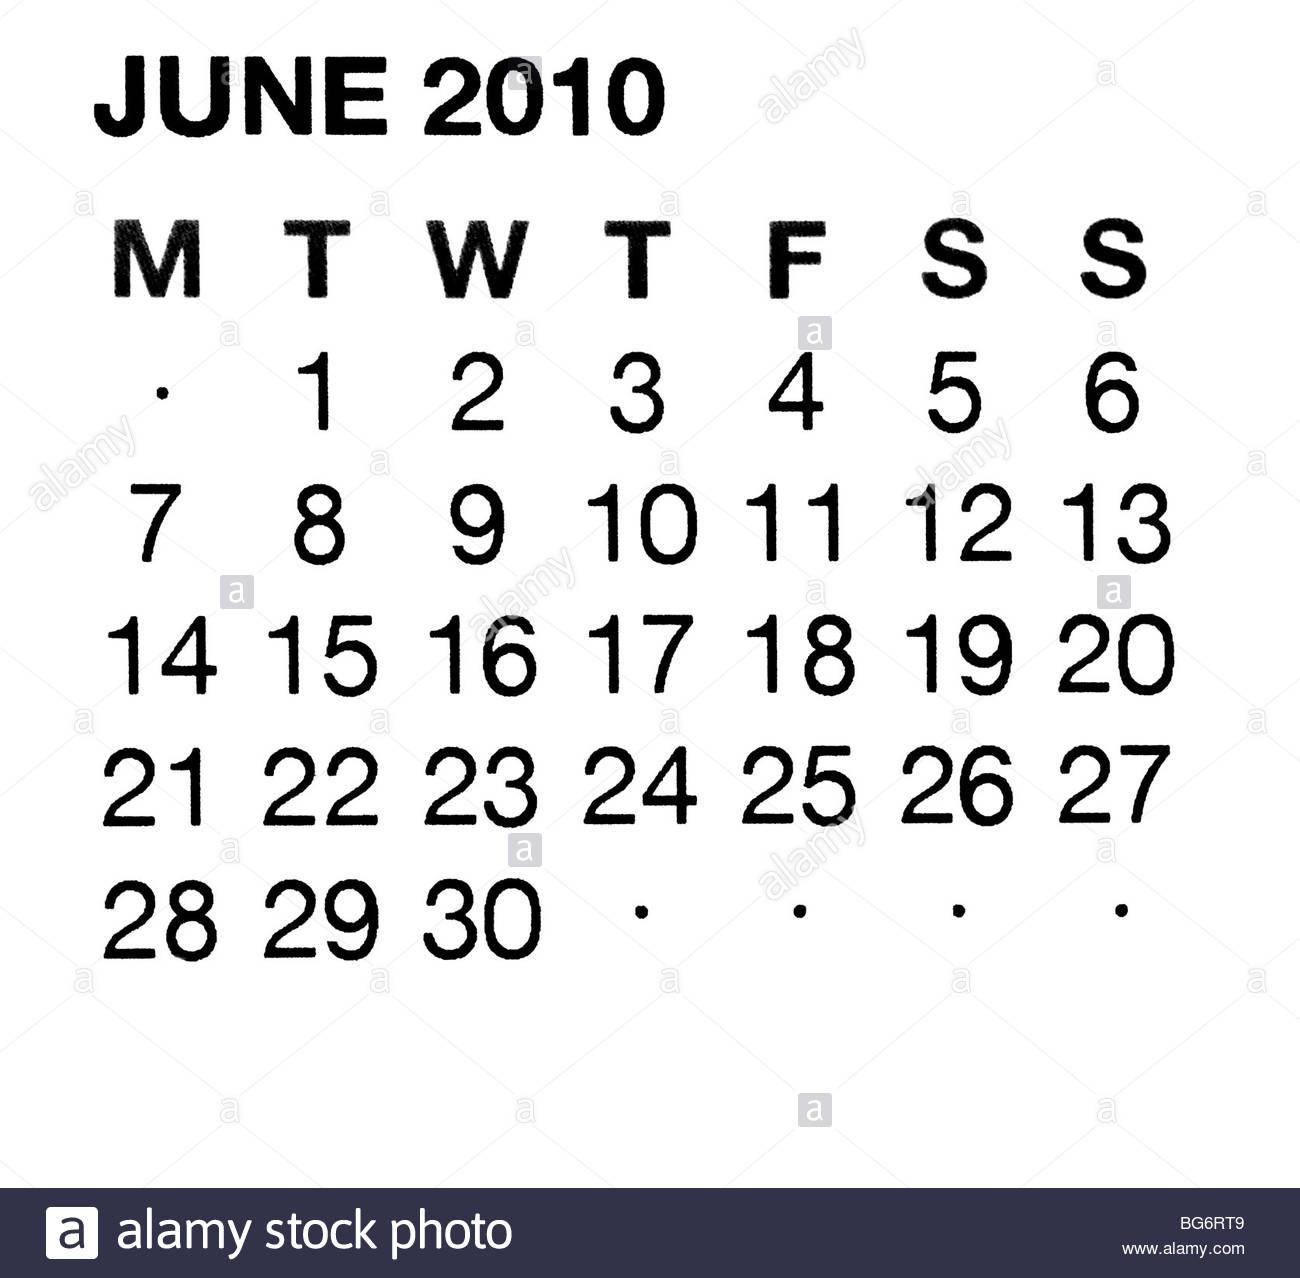 June 2010 calendar Stock Photo